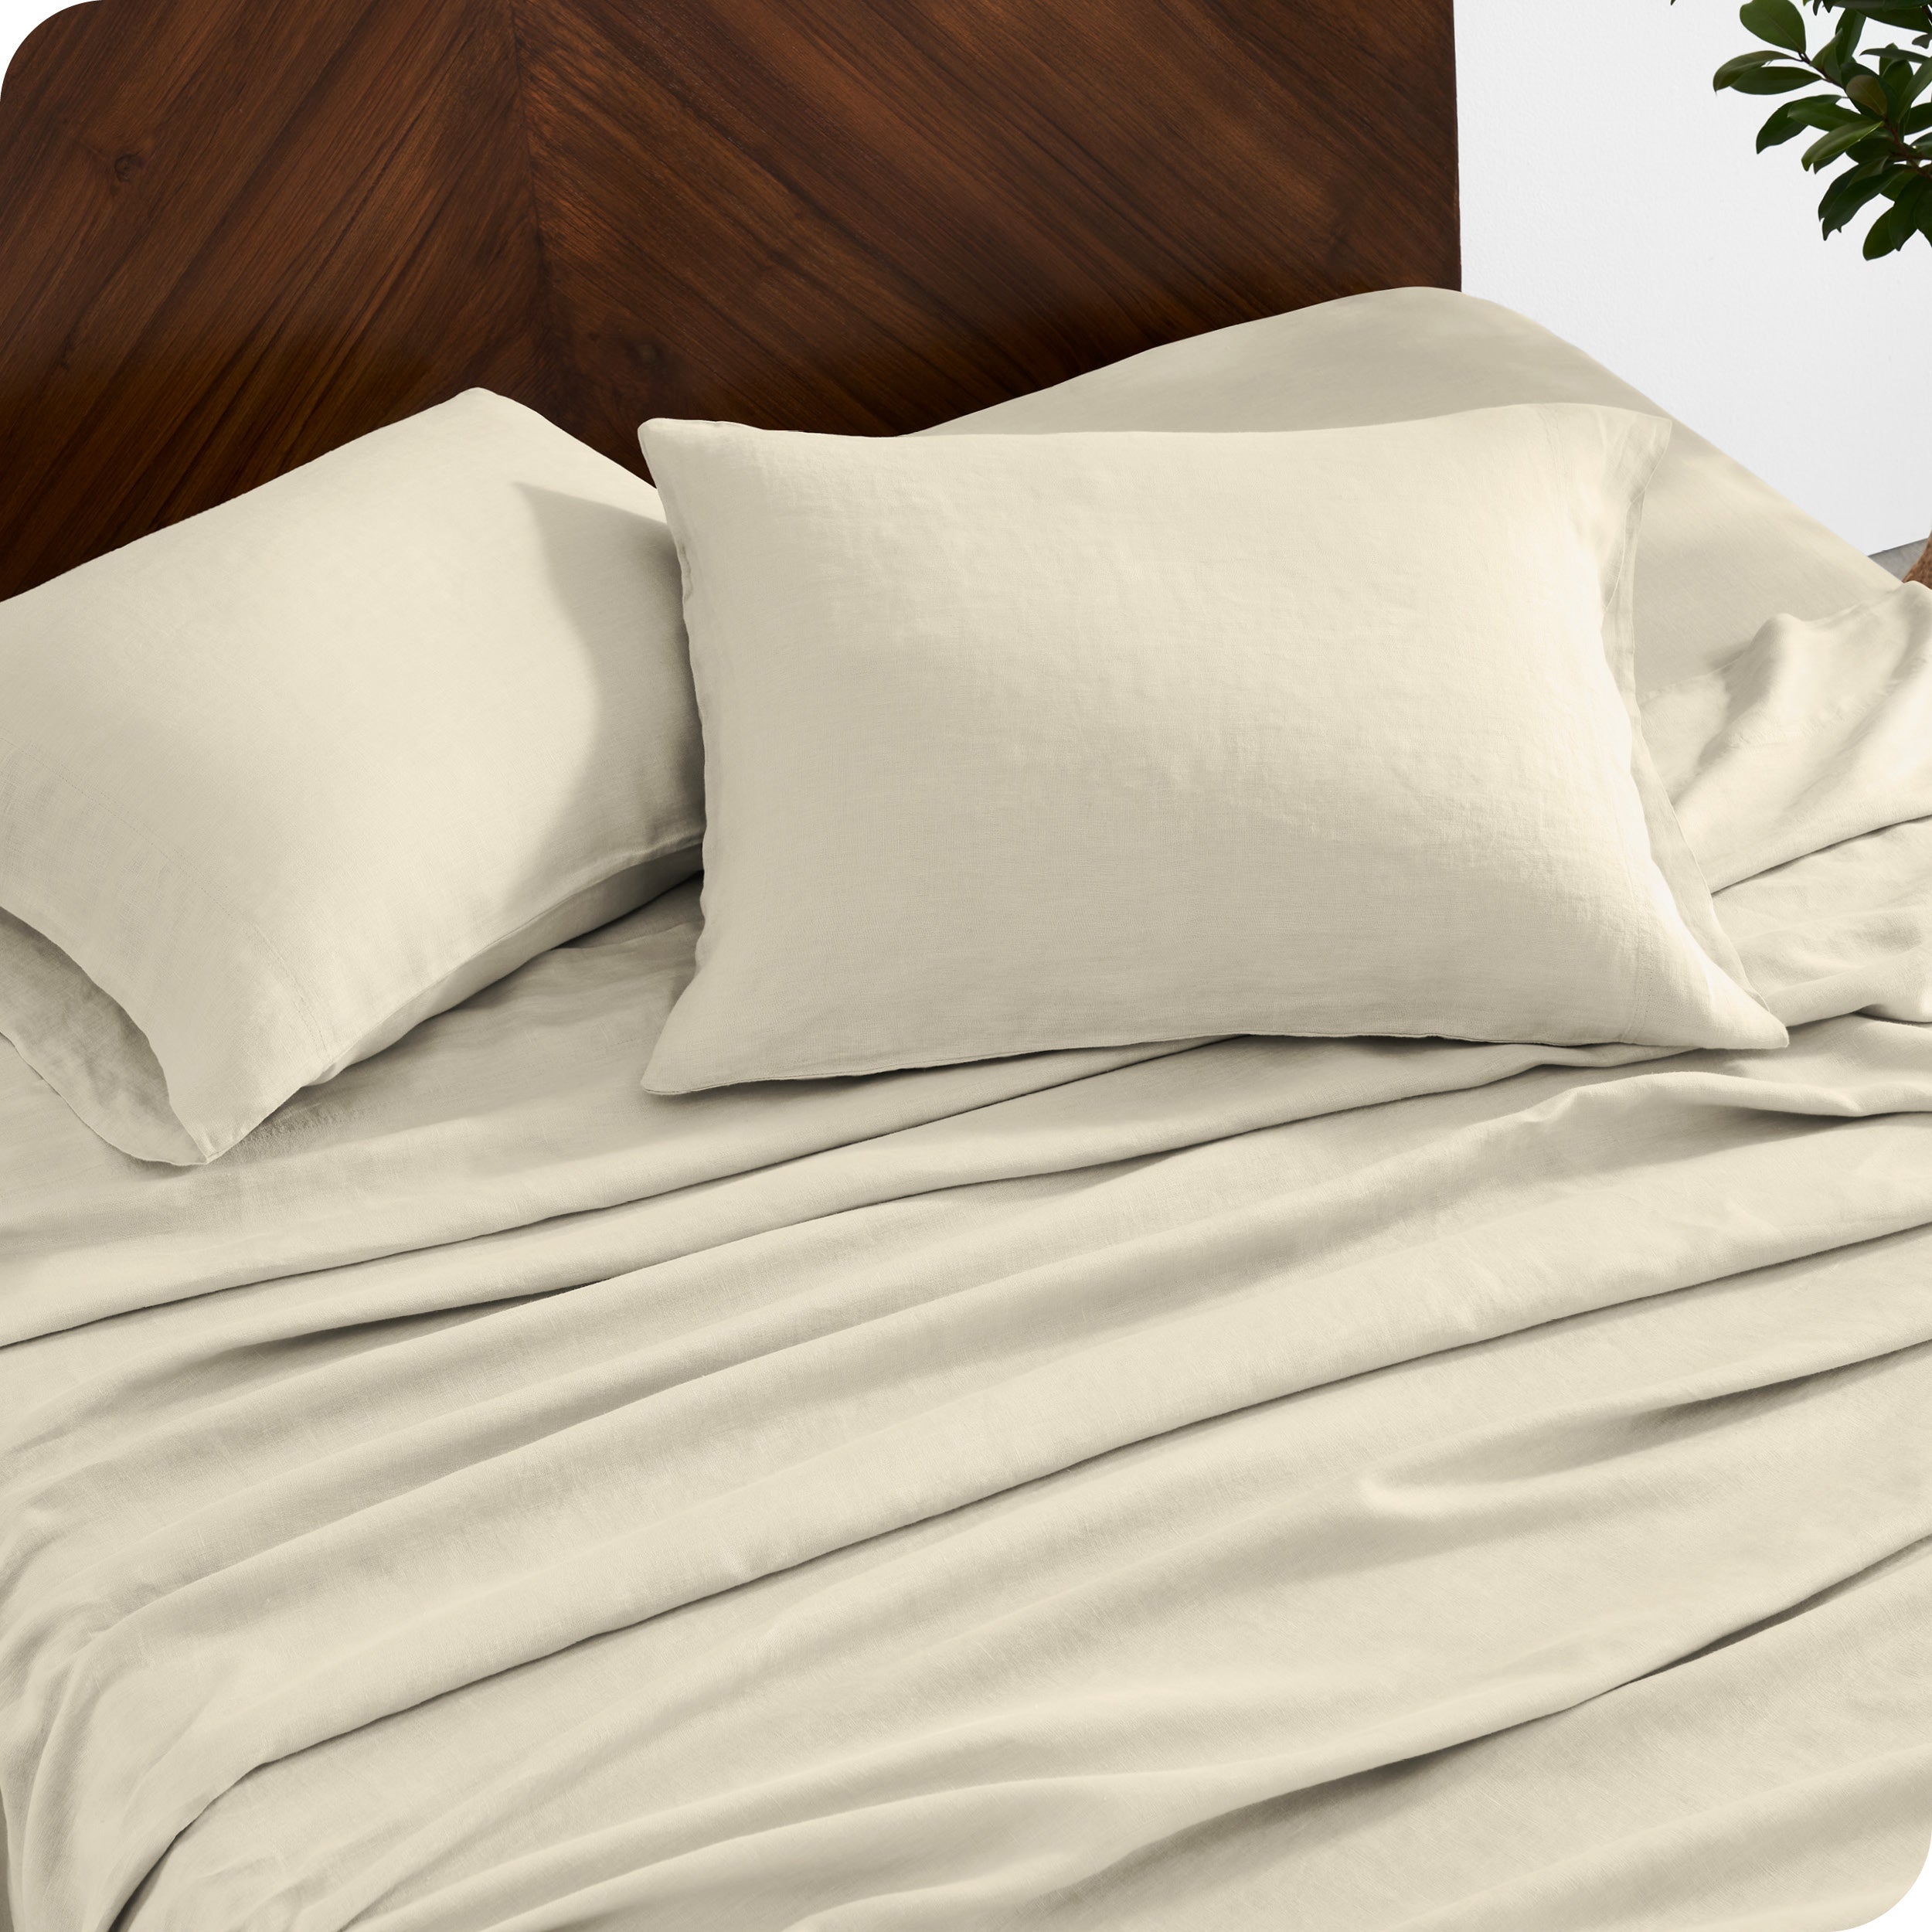 Close up of linen sheet set on a mattress with pillows inside the pillowcases